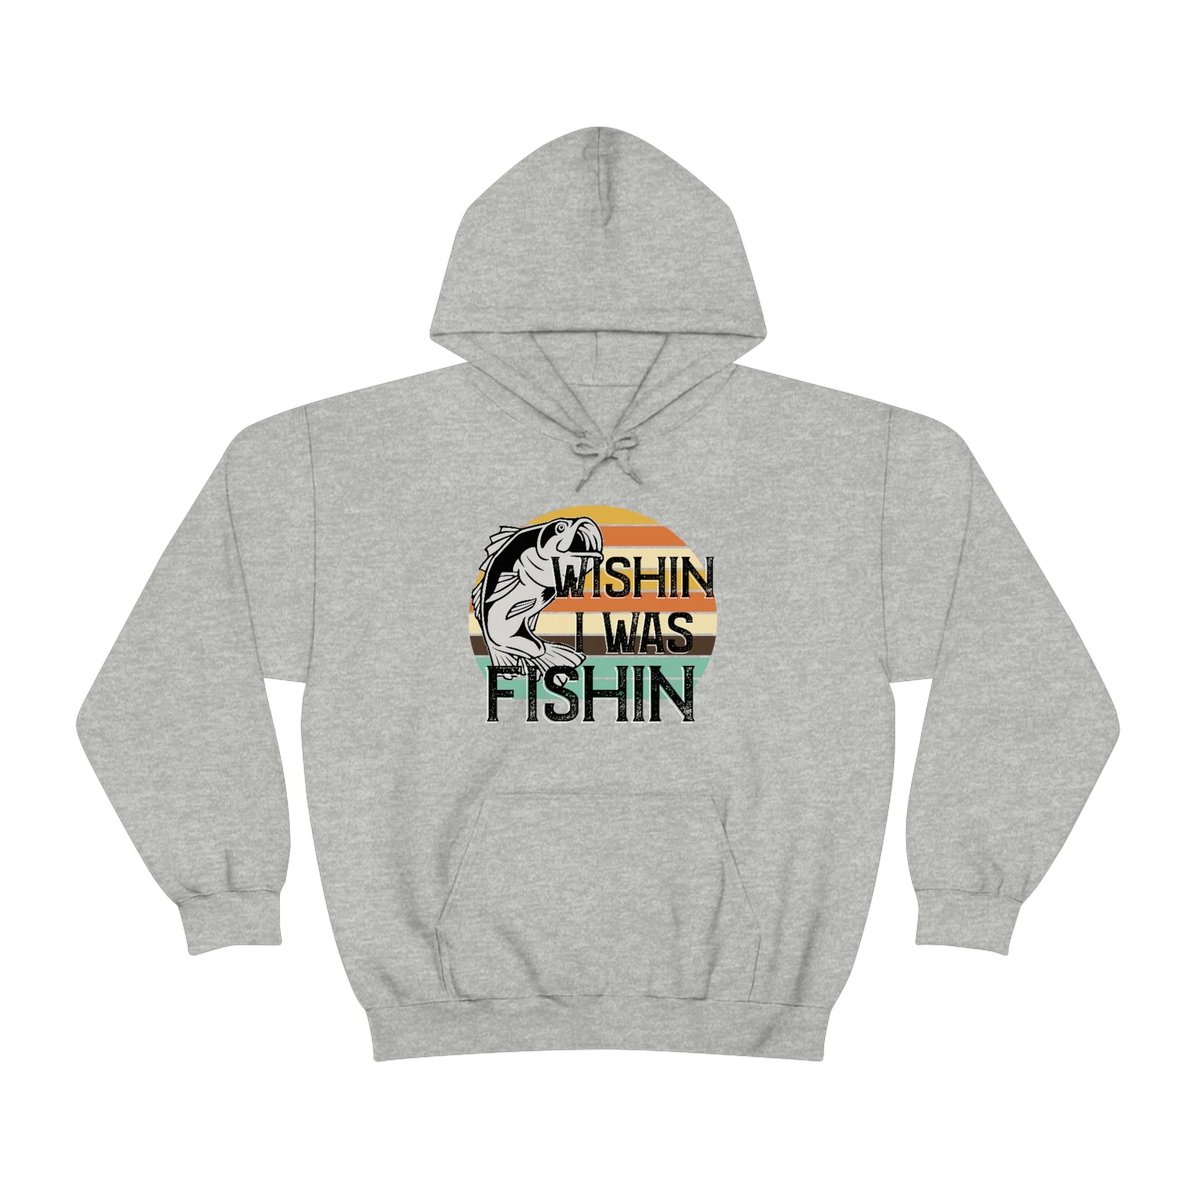 the4ddesignco.com/products/wishi…
🎣🎣🎣🎣
#the4ddesignco #hoodie #mensapparel #fishing #fishon #bassfishing #pafishing #fishinglife #shopsmall #smallbusiness #shopsmallbusiness